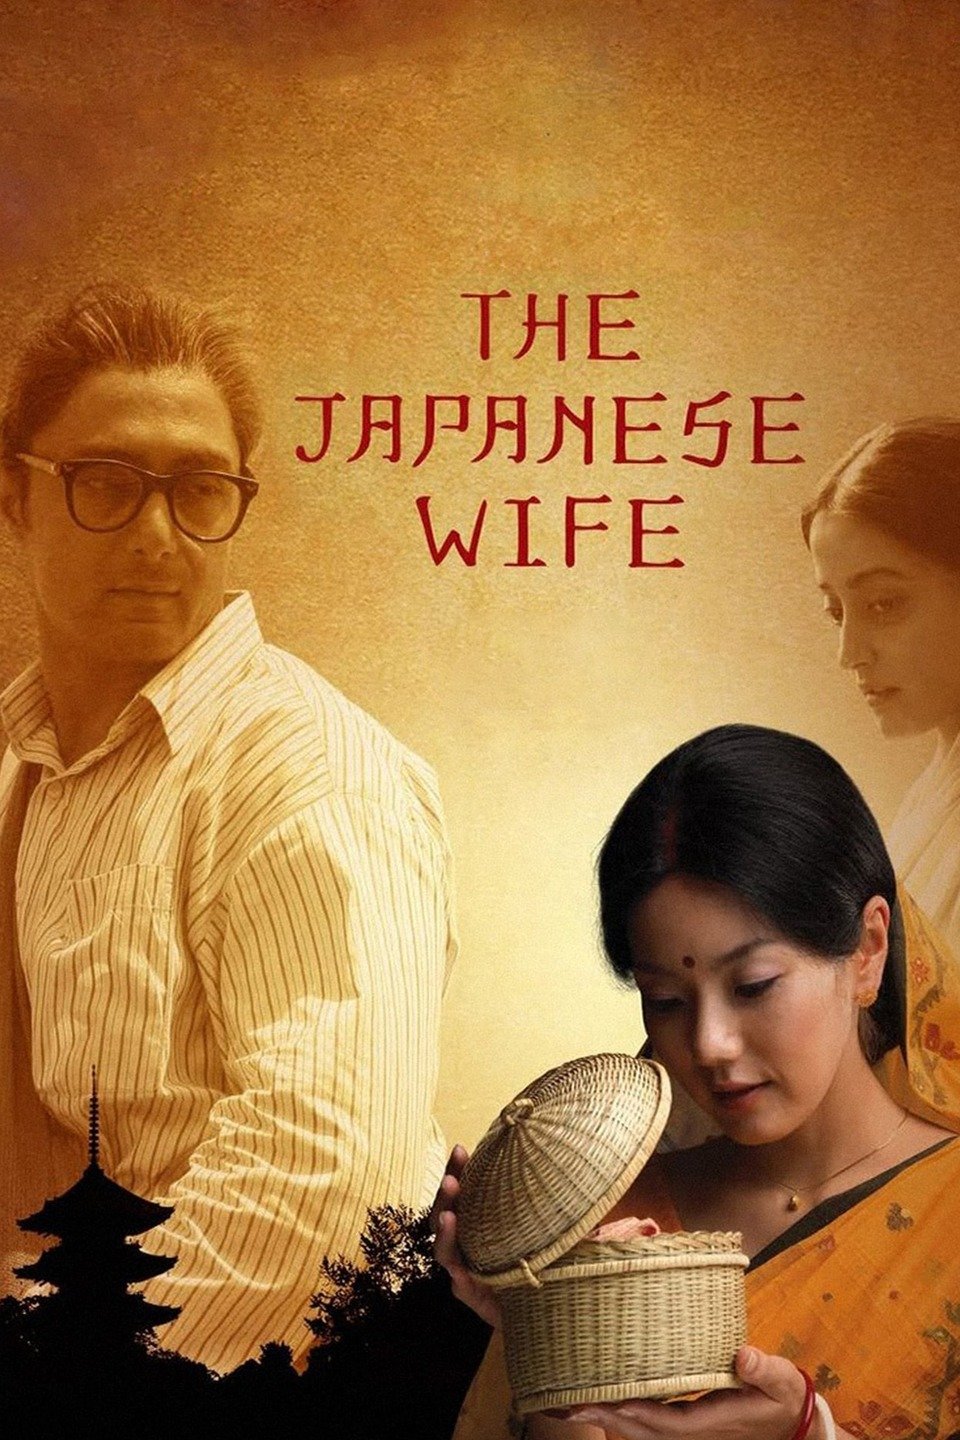 japan wife take care